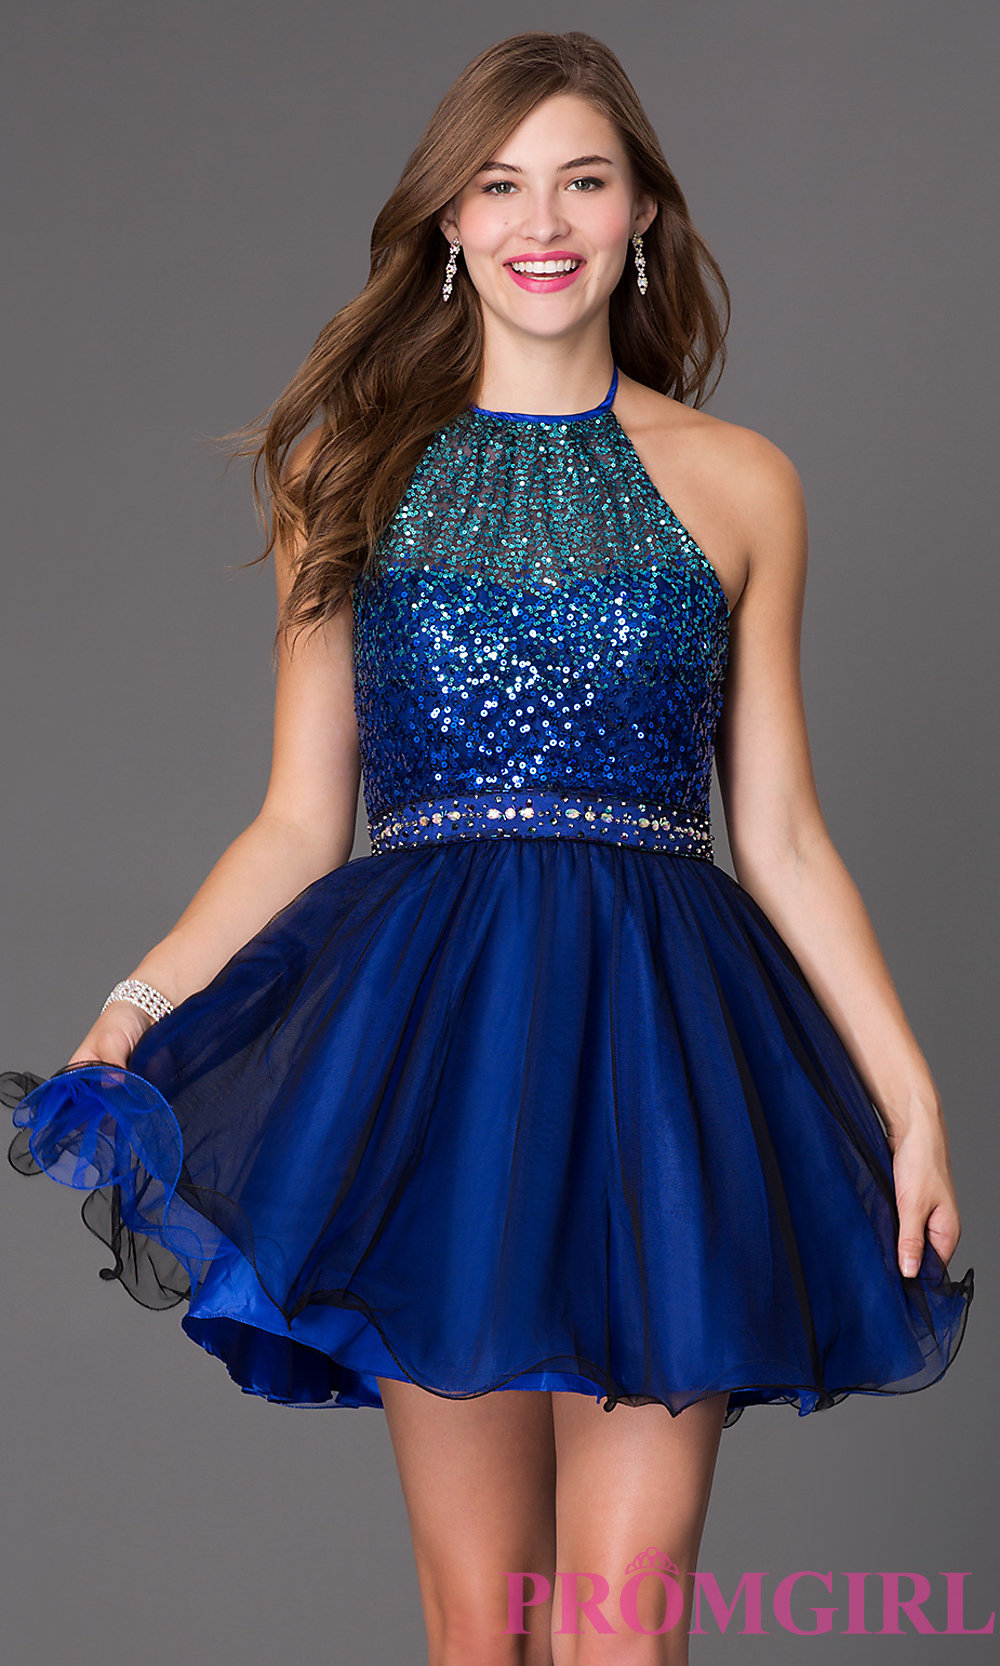 Short Blue Sequin Dress - Make Your Evening Special